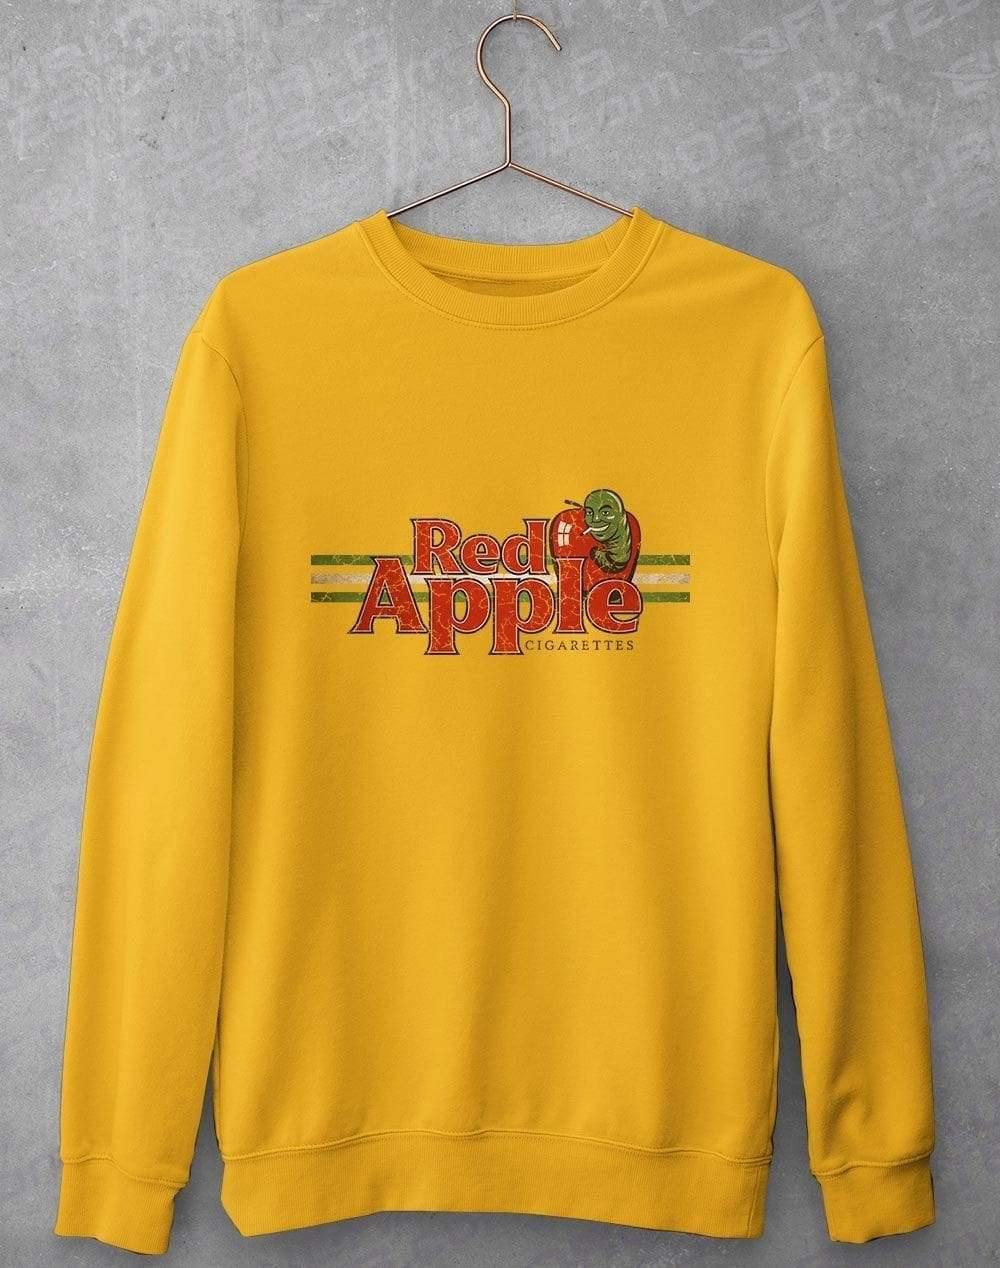 Red Apple Cigarettes Sweatshirt S / Gold  - Off World Tees